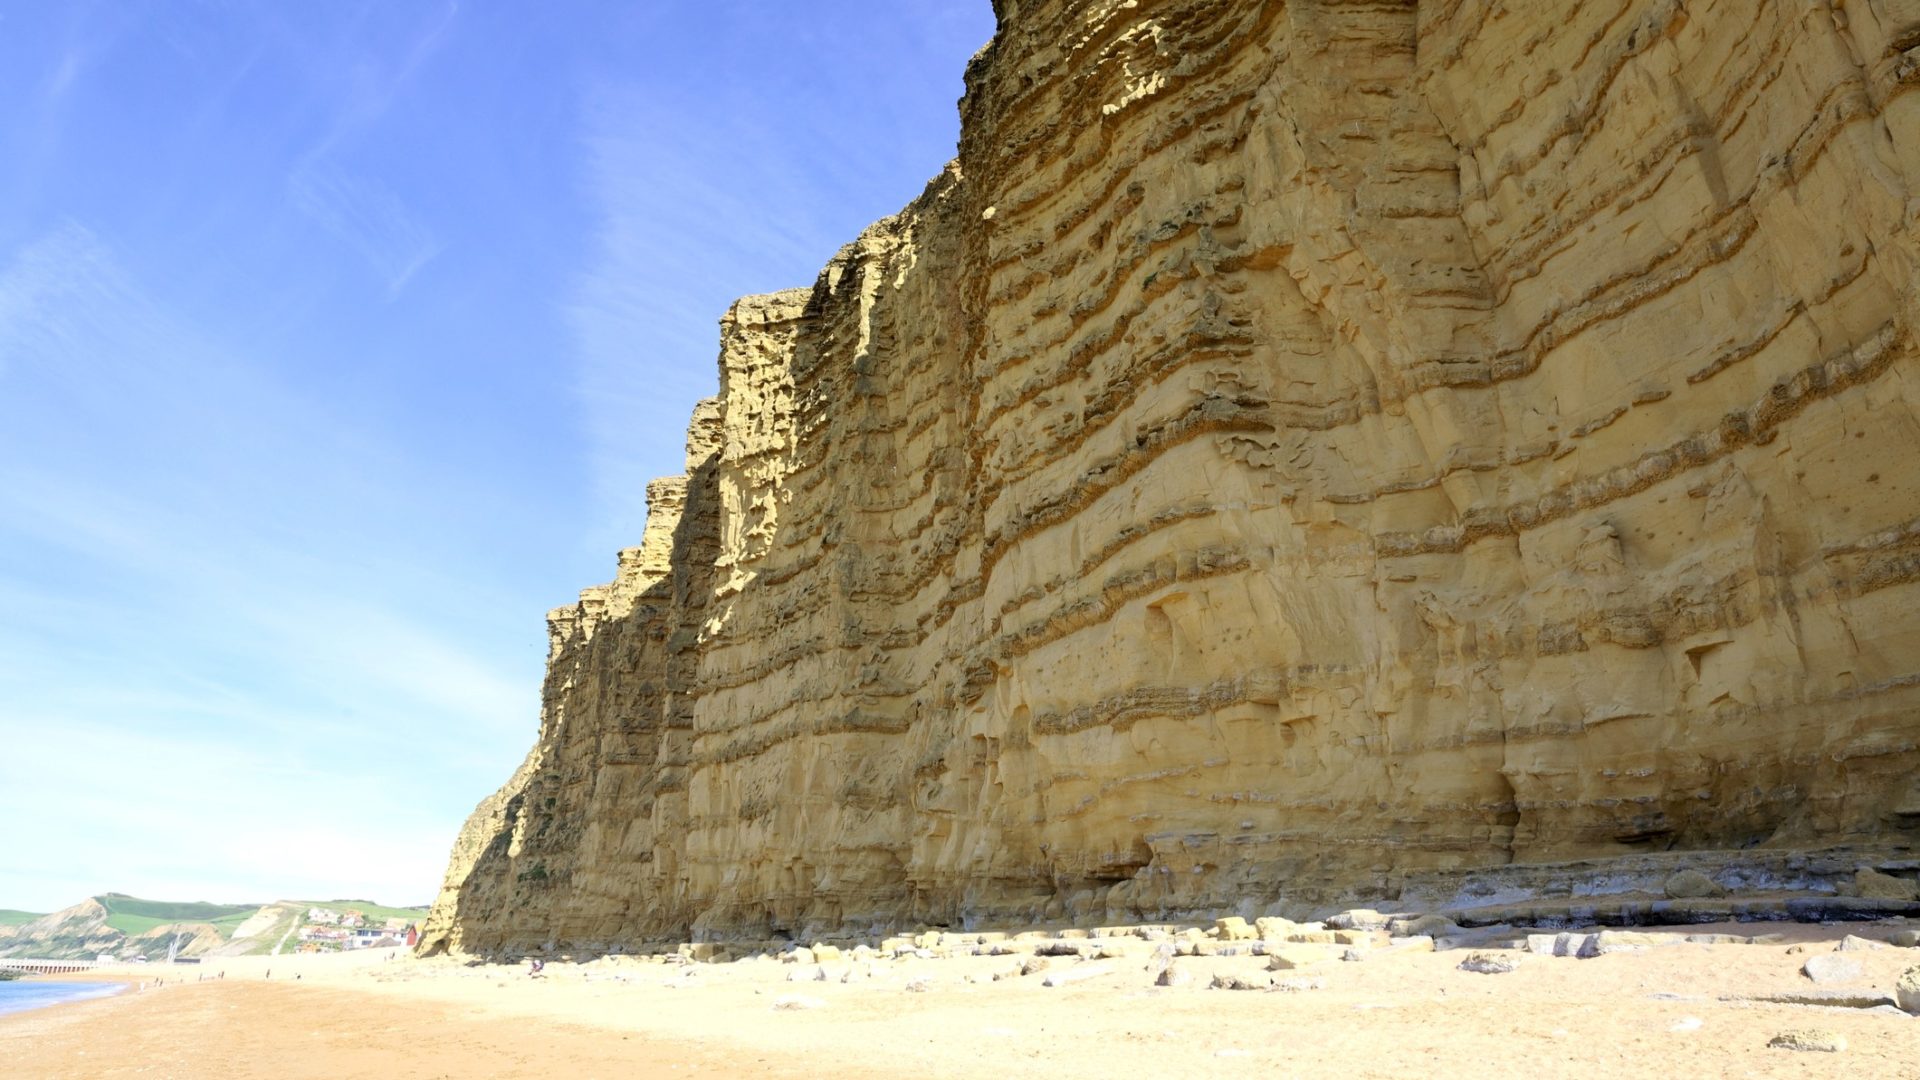 West Bay Dorset coastal erosion cliffs